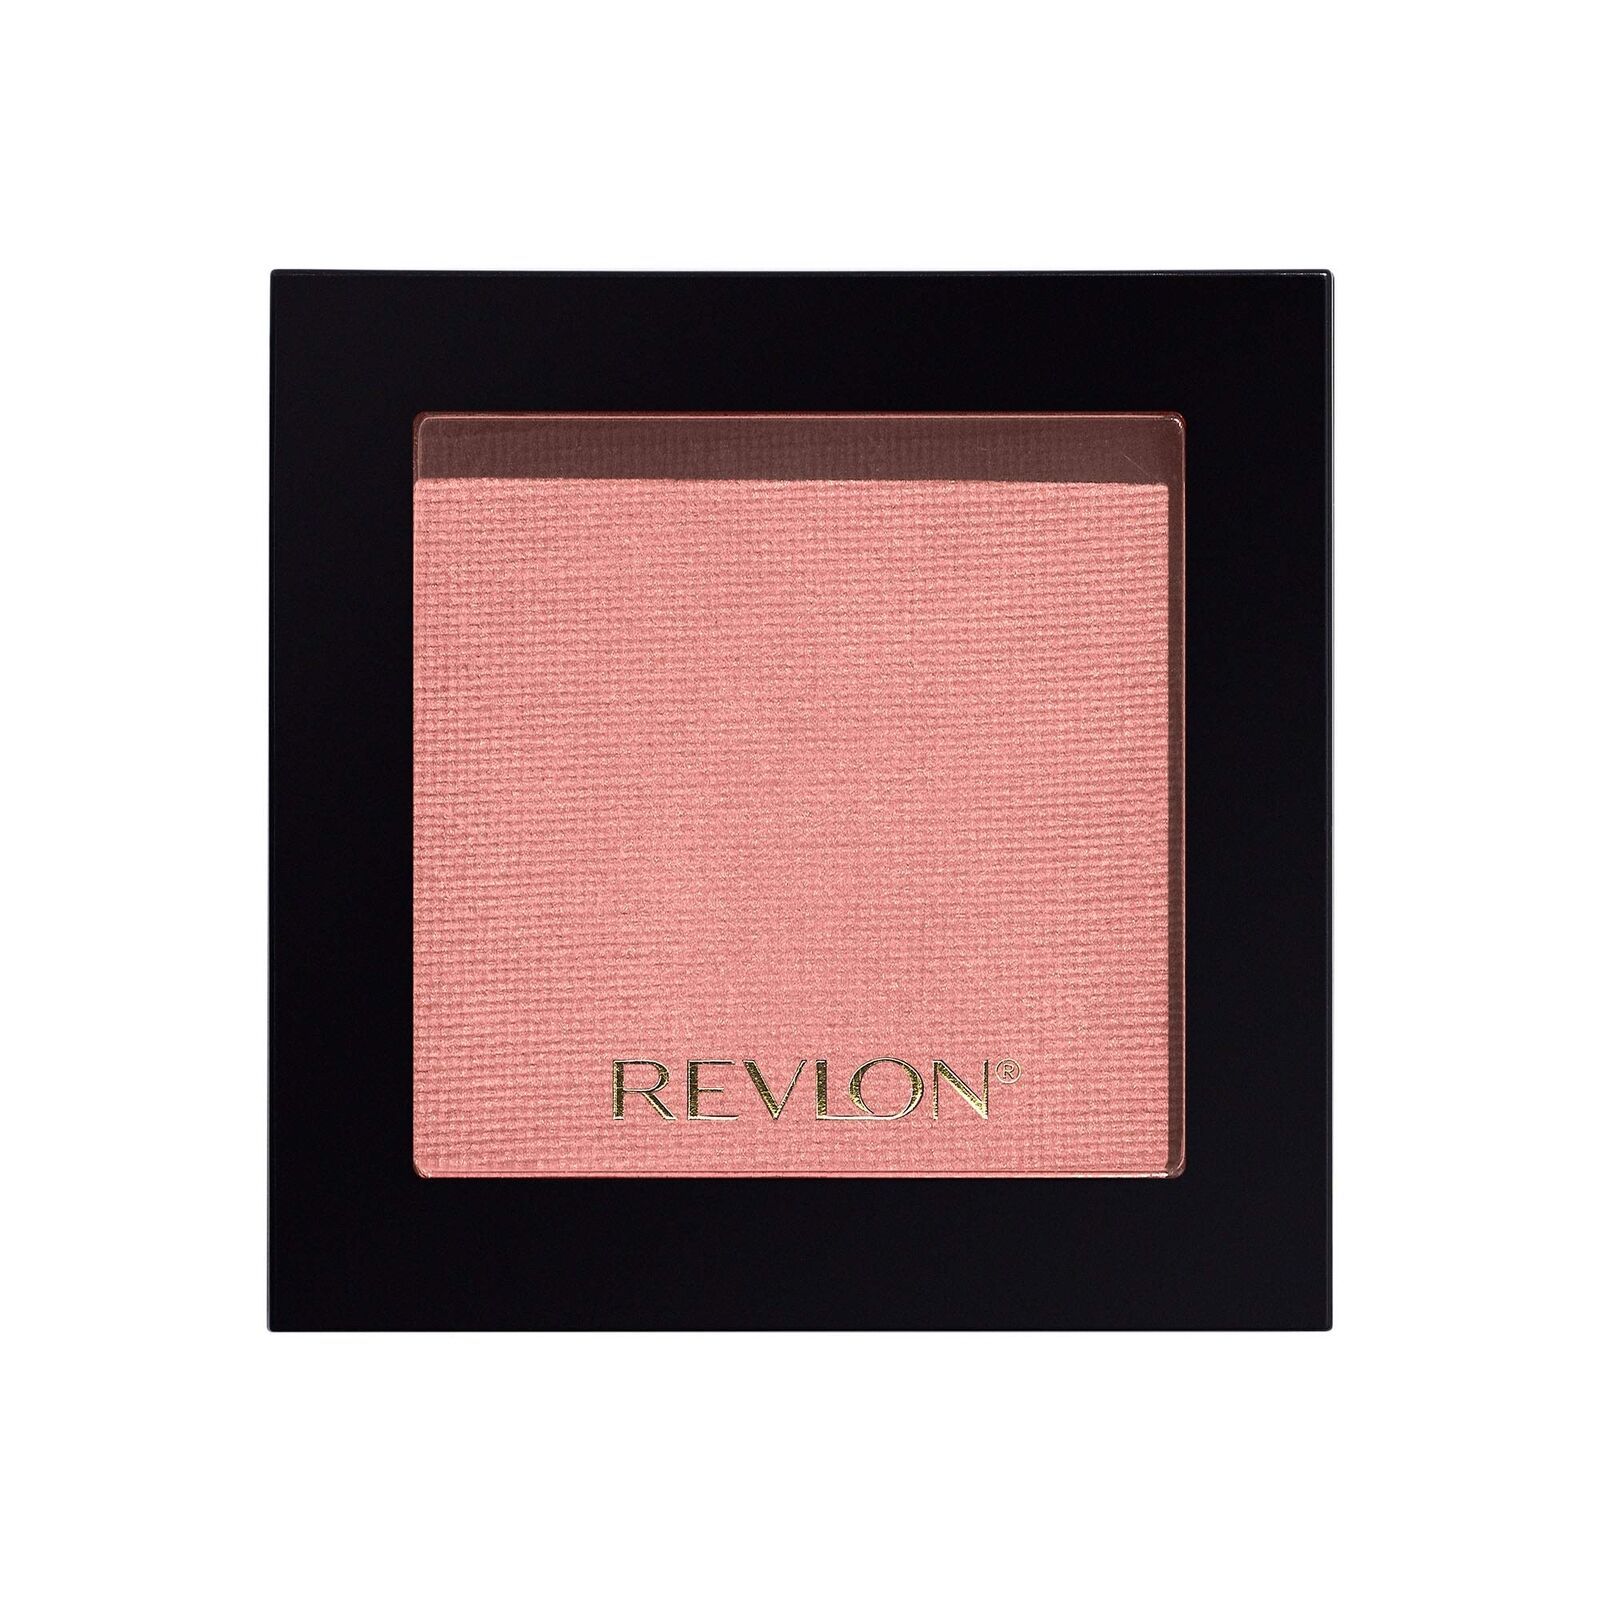 Revlon Blush, Powder Blush Face Makeup, High Impact Buildable Color, Lightweight - $14.59